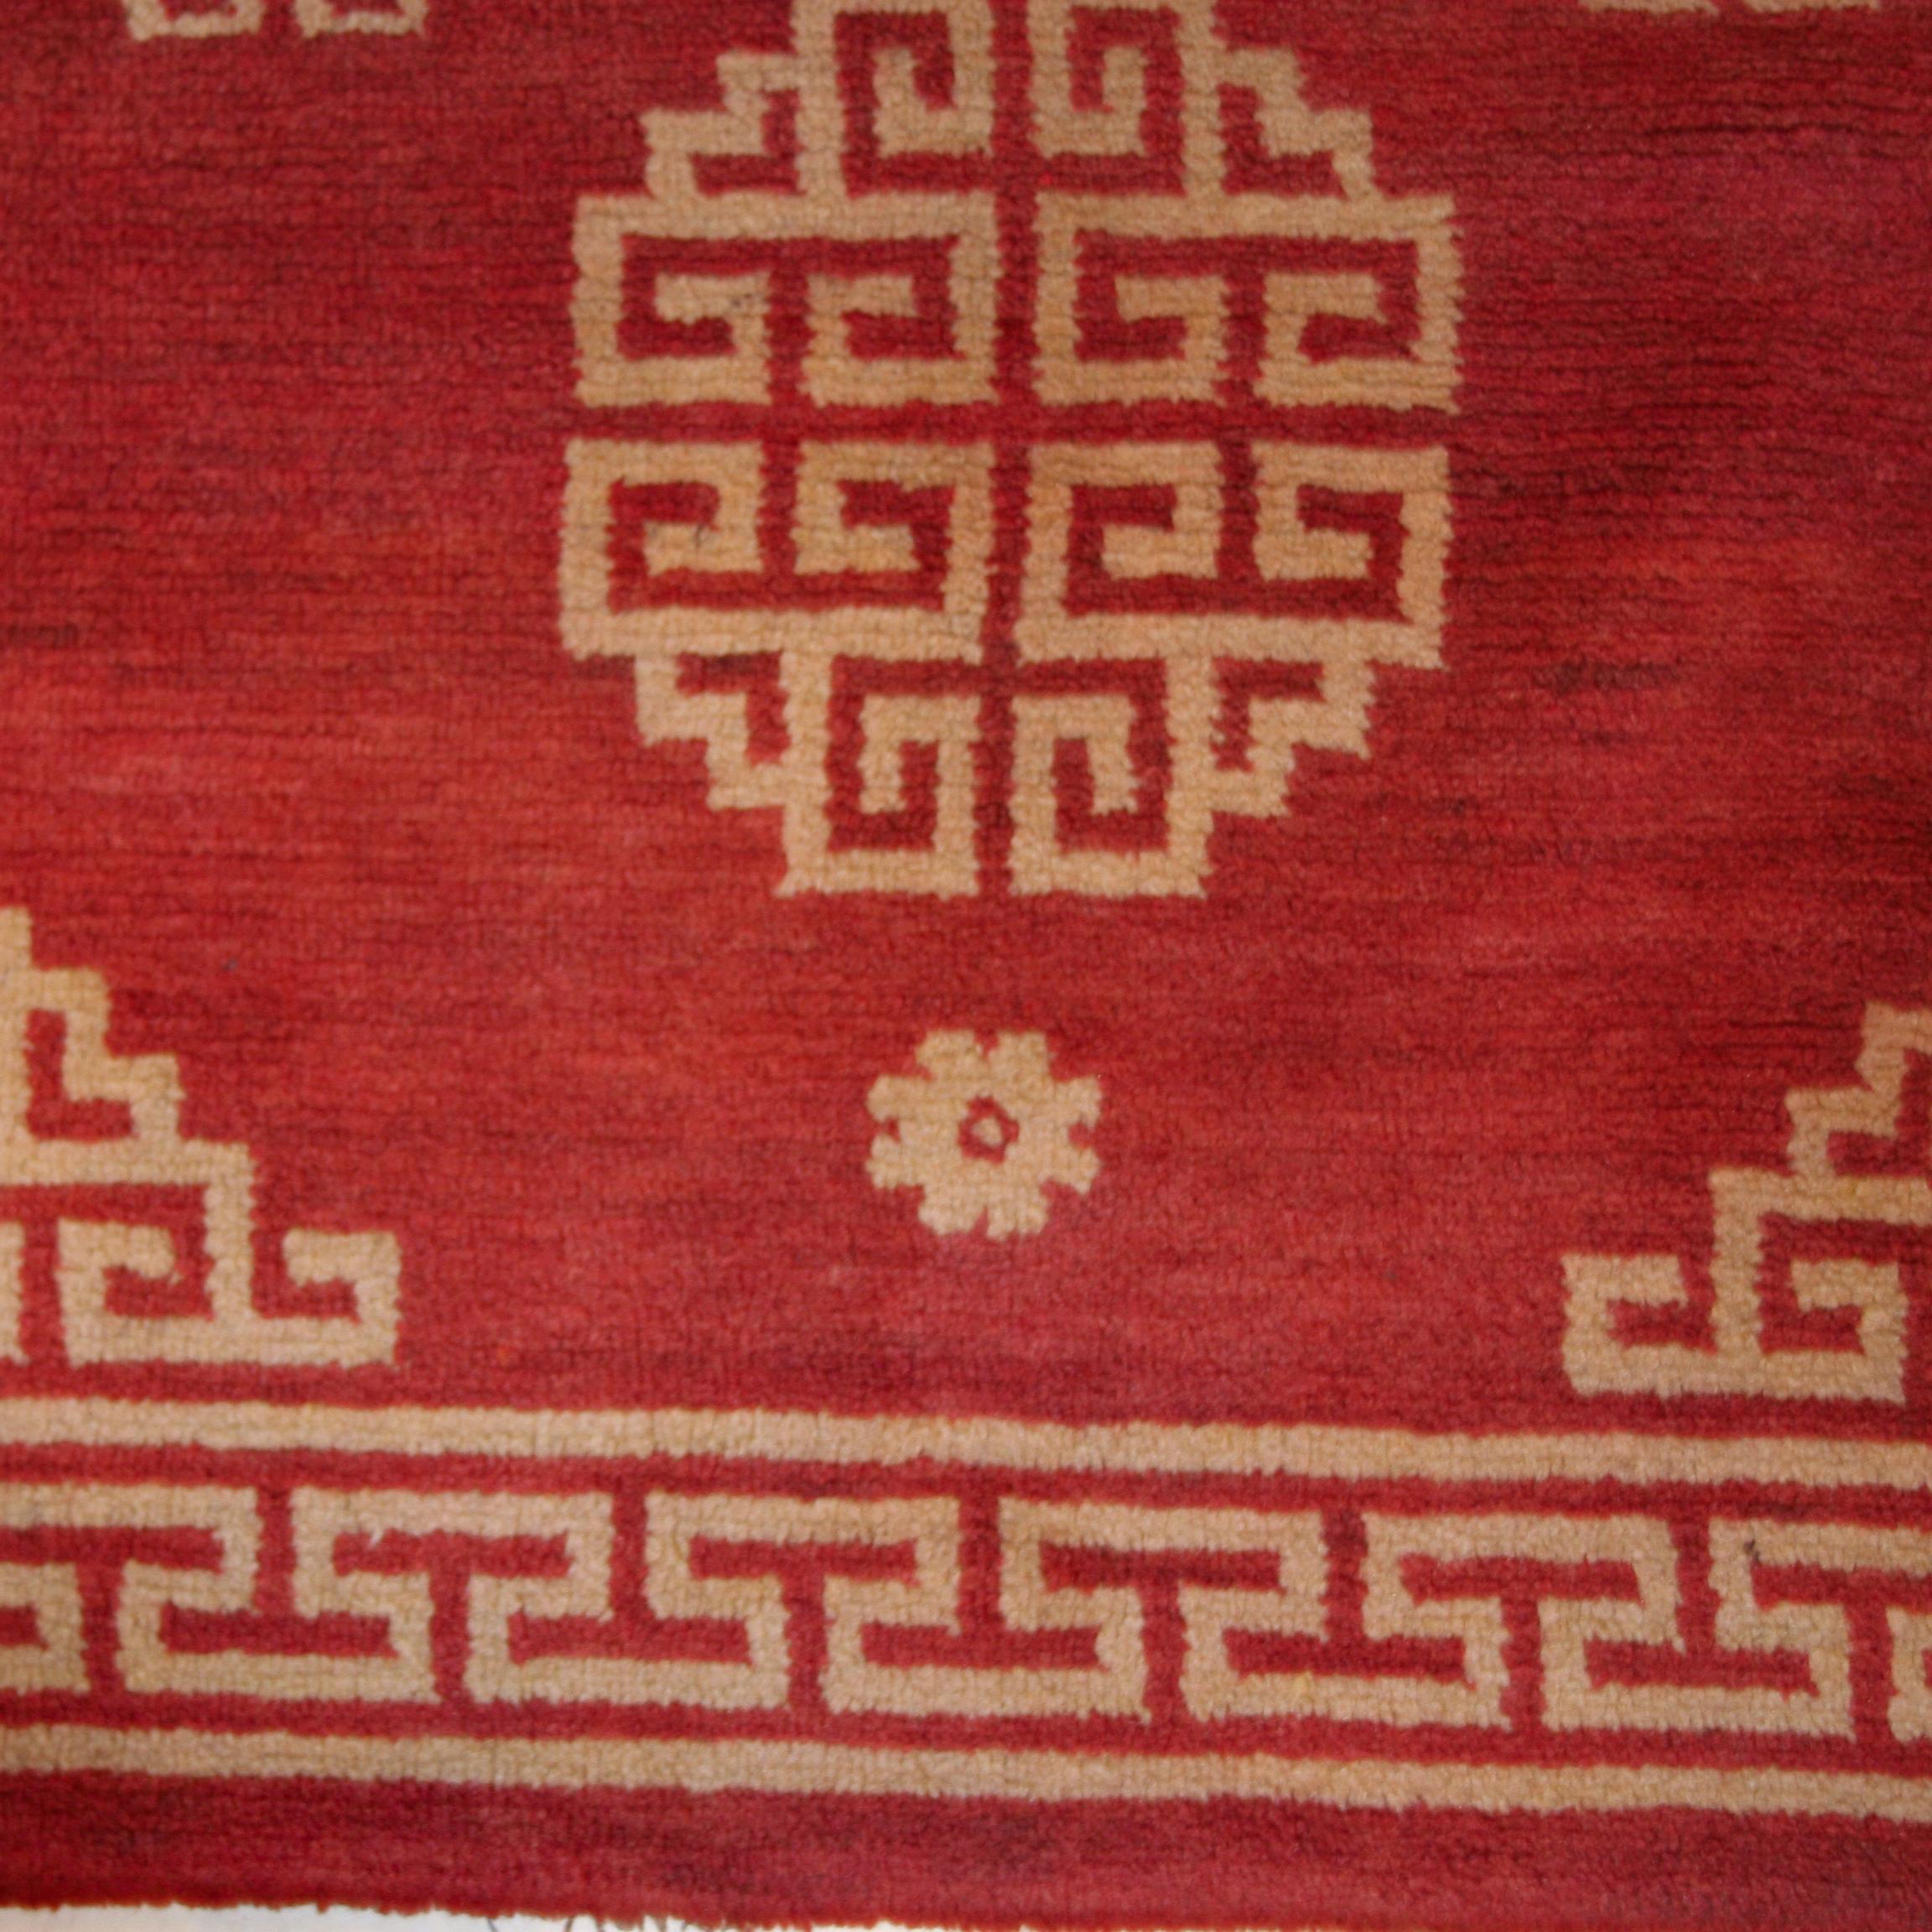 west asian carpet design